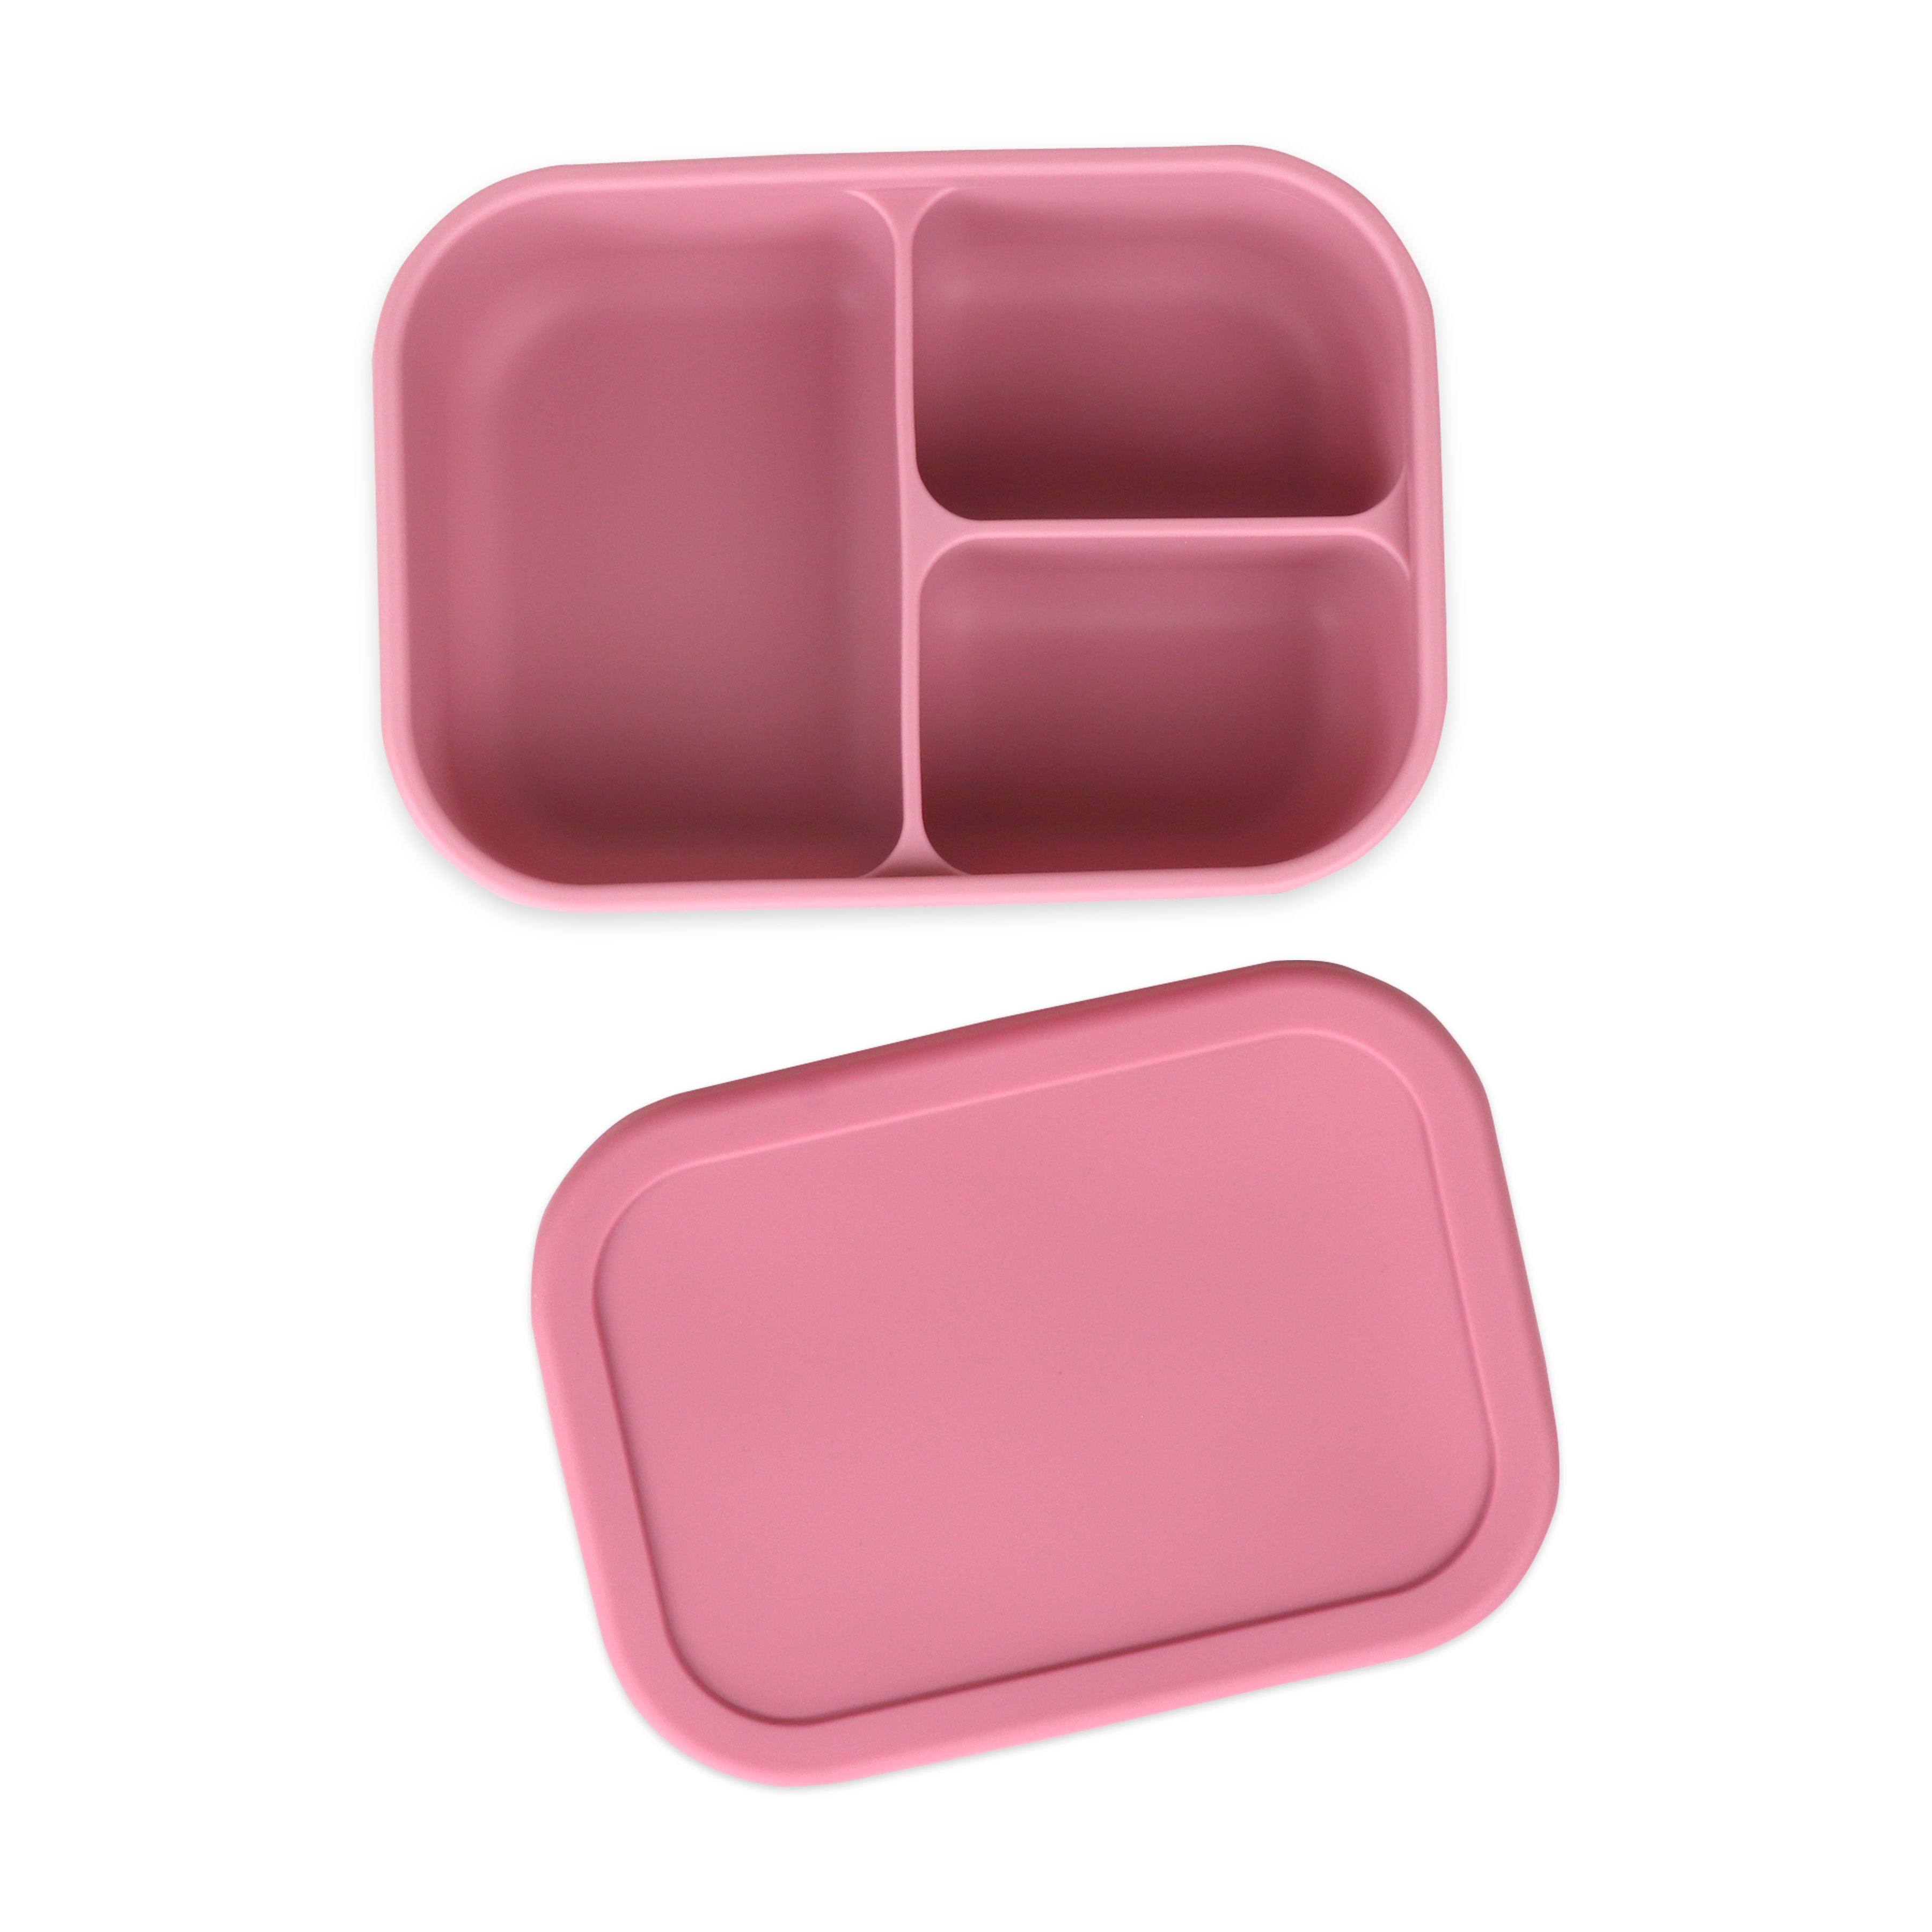 Silicone Bento Box - Standard (Rose)